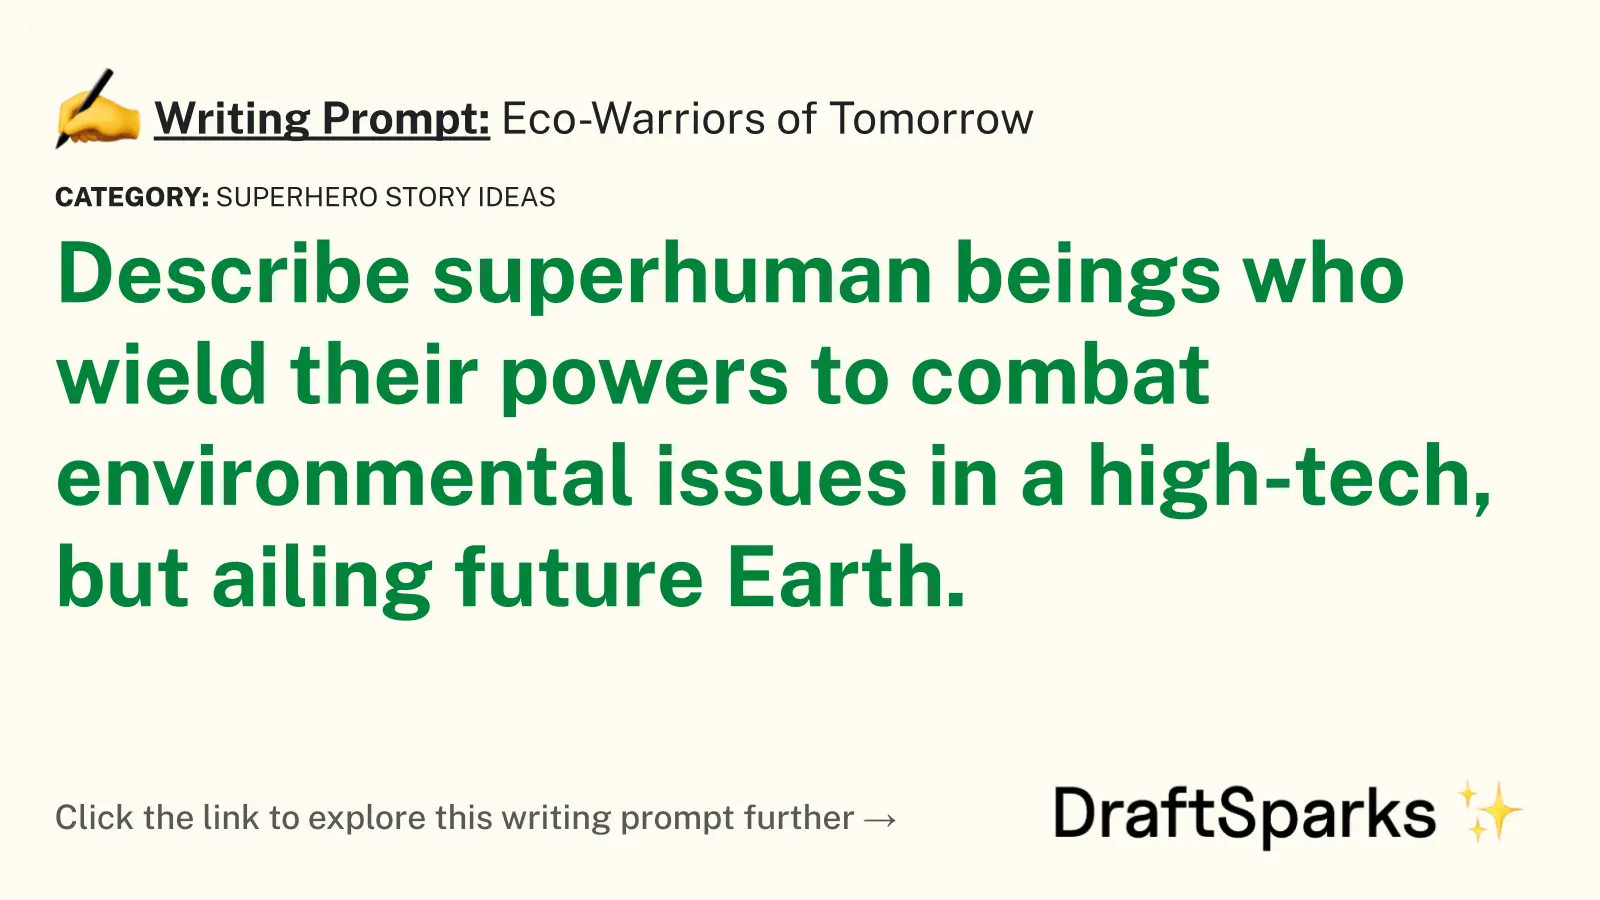 Eco-Warriors of Tomorrow